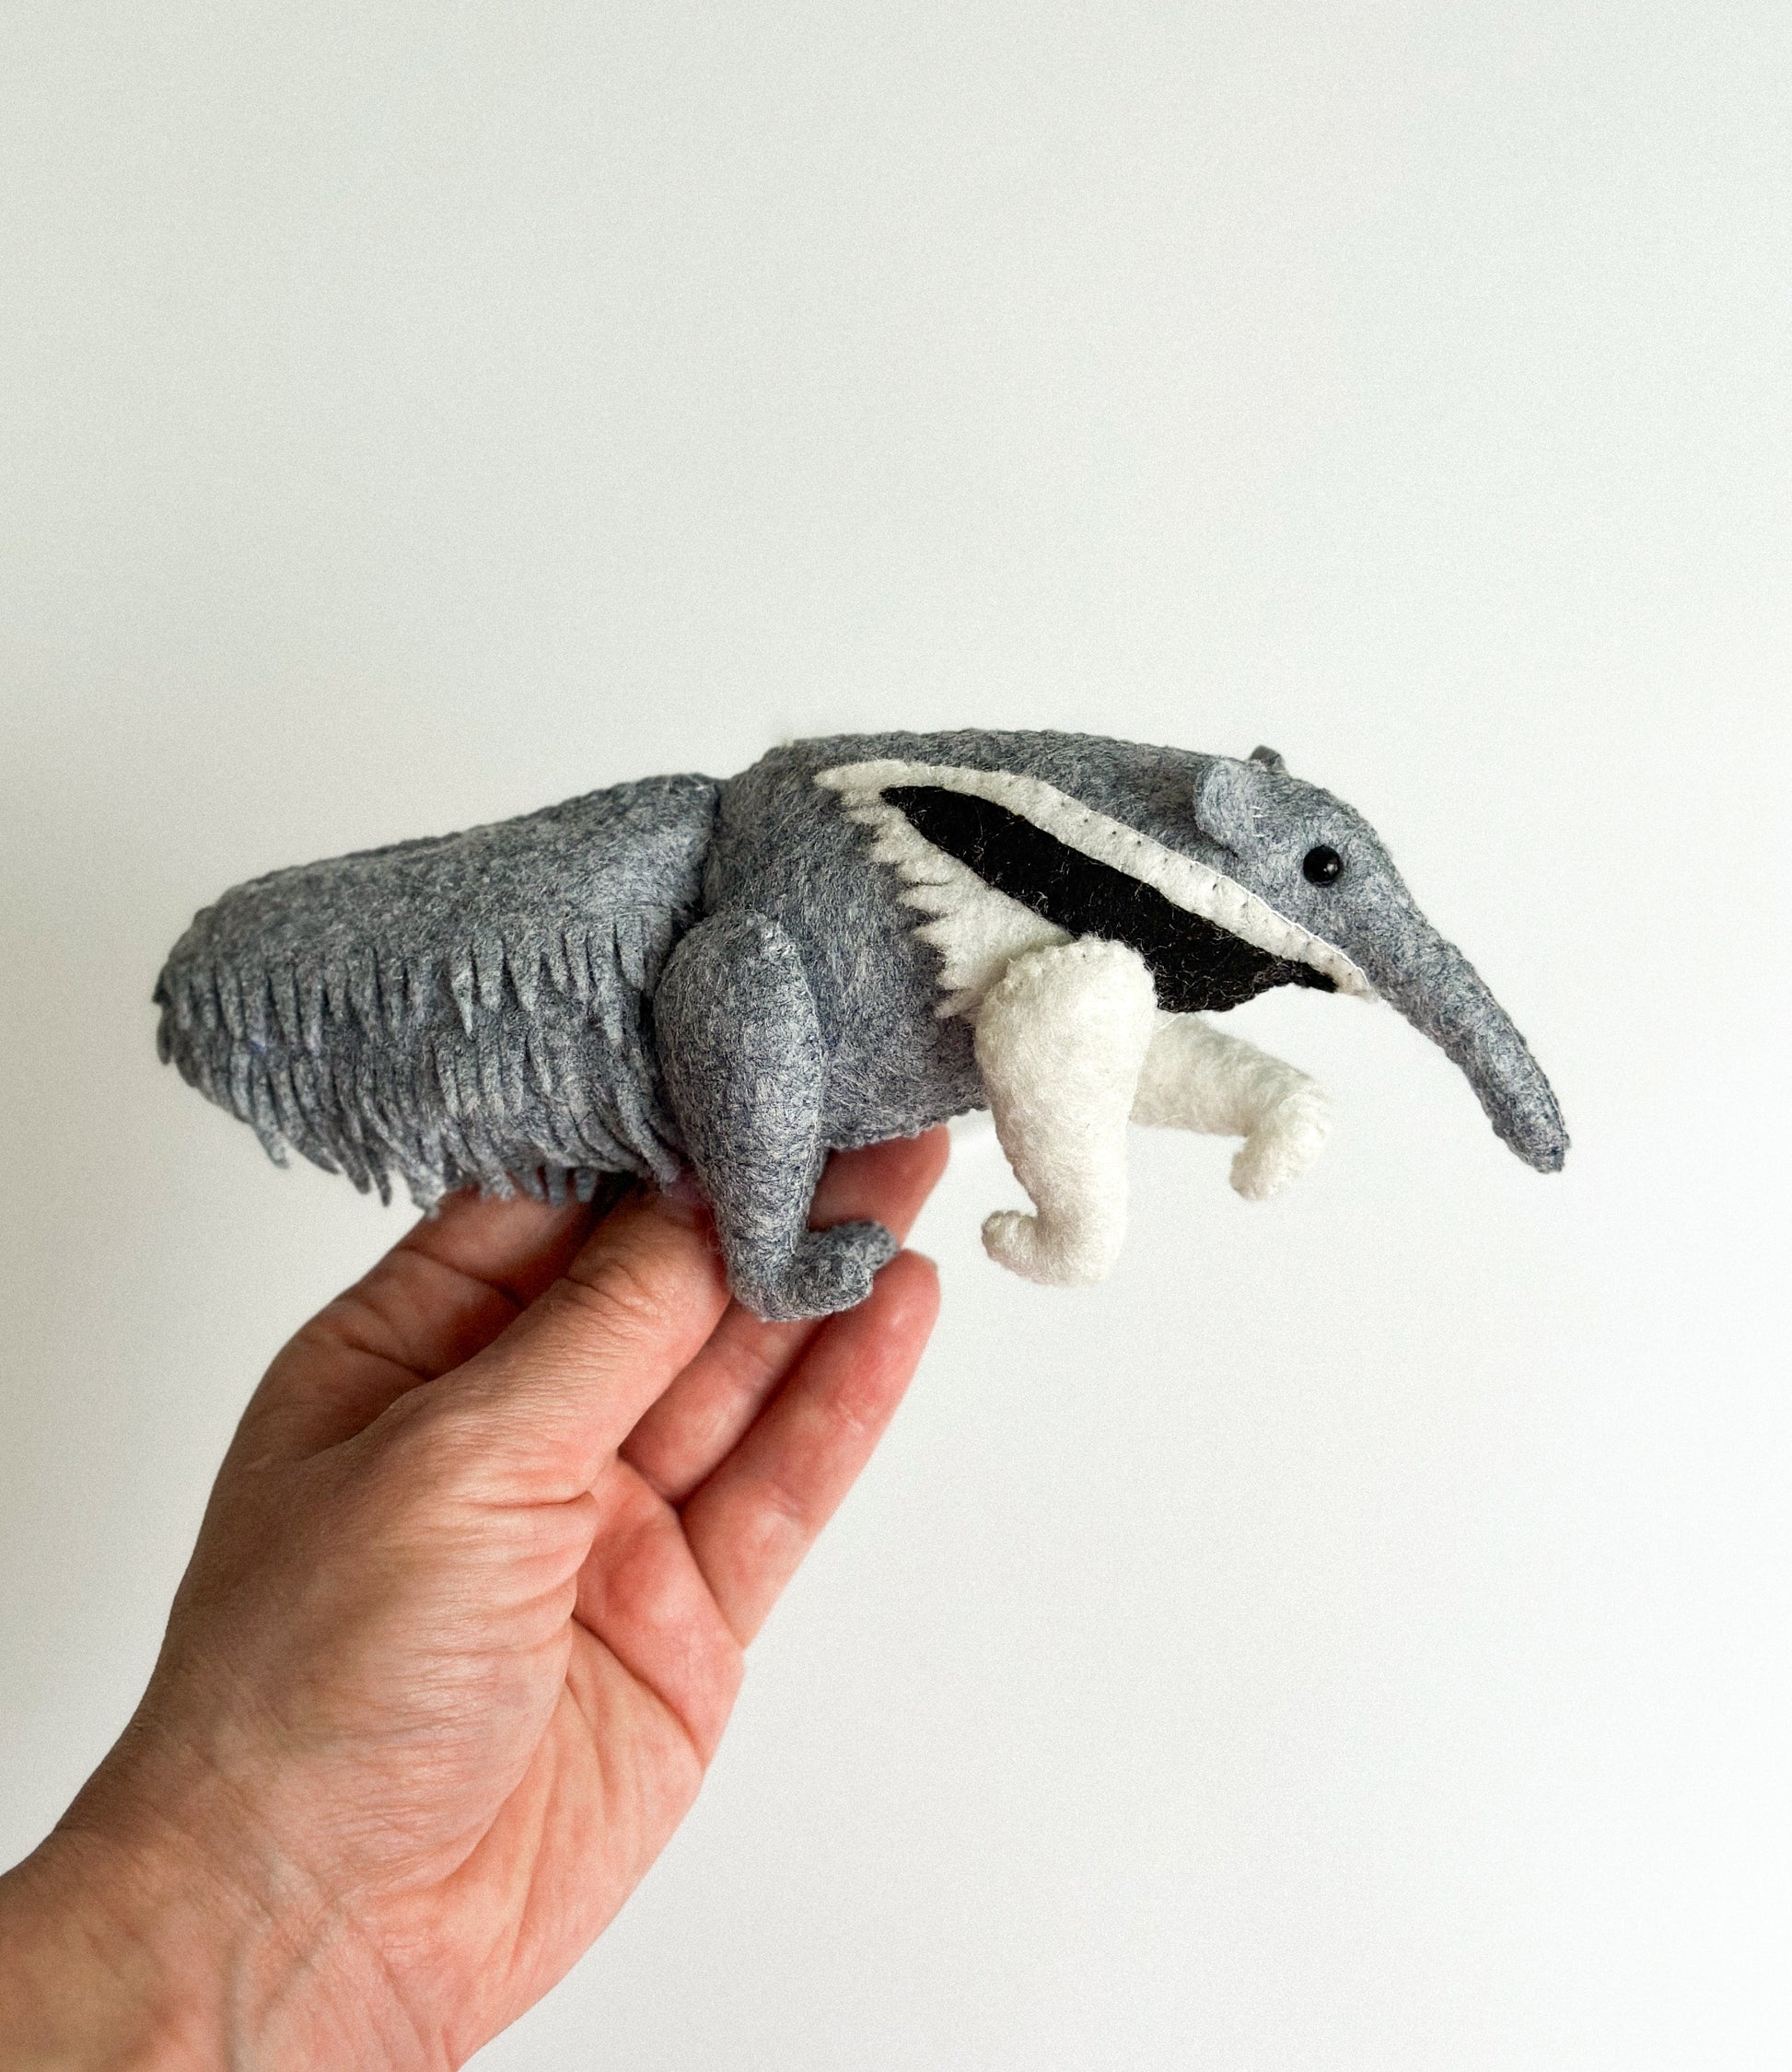 Handcrafted Felt Anteater Ornament